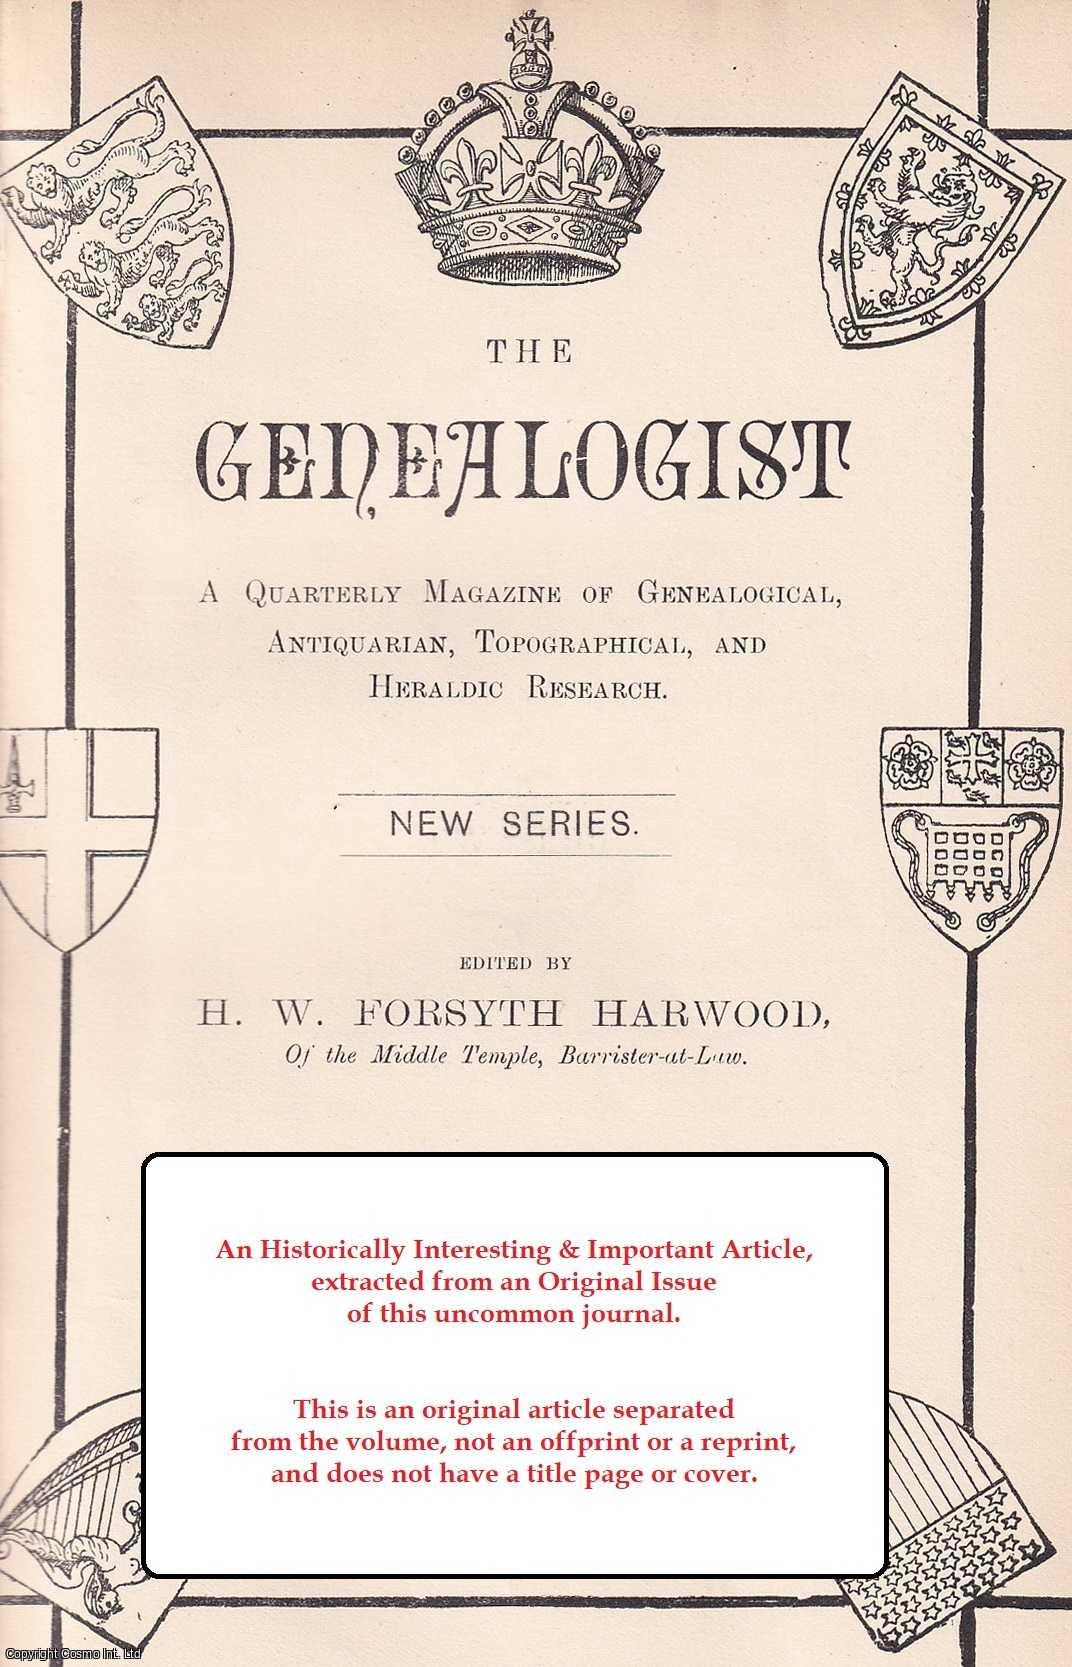 G. E. C. - Pedigree of Castillion - Part III. An original article from The Genealogist, 1900.